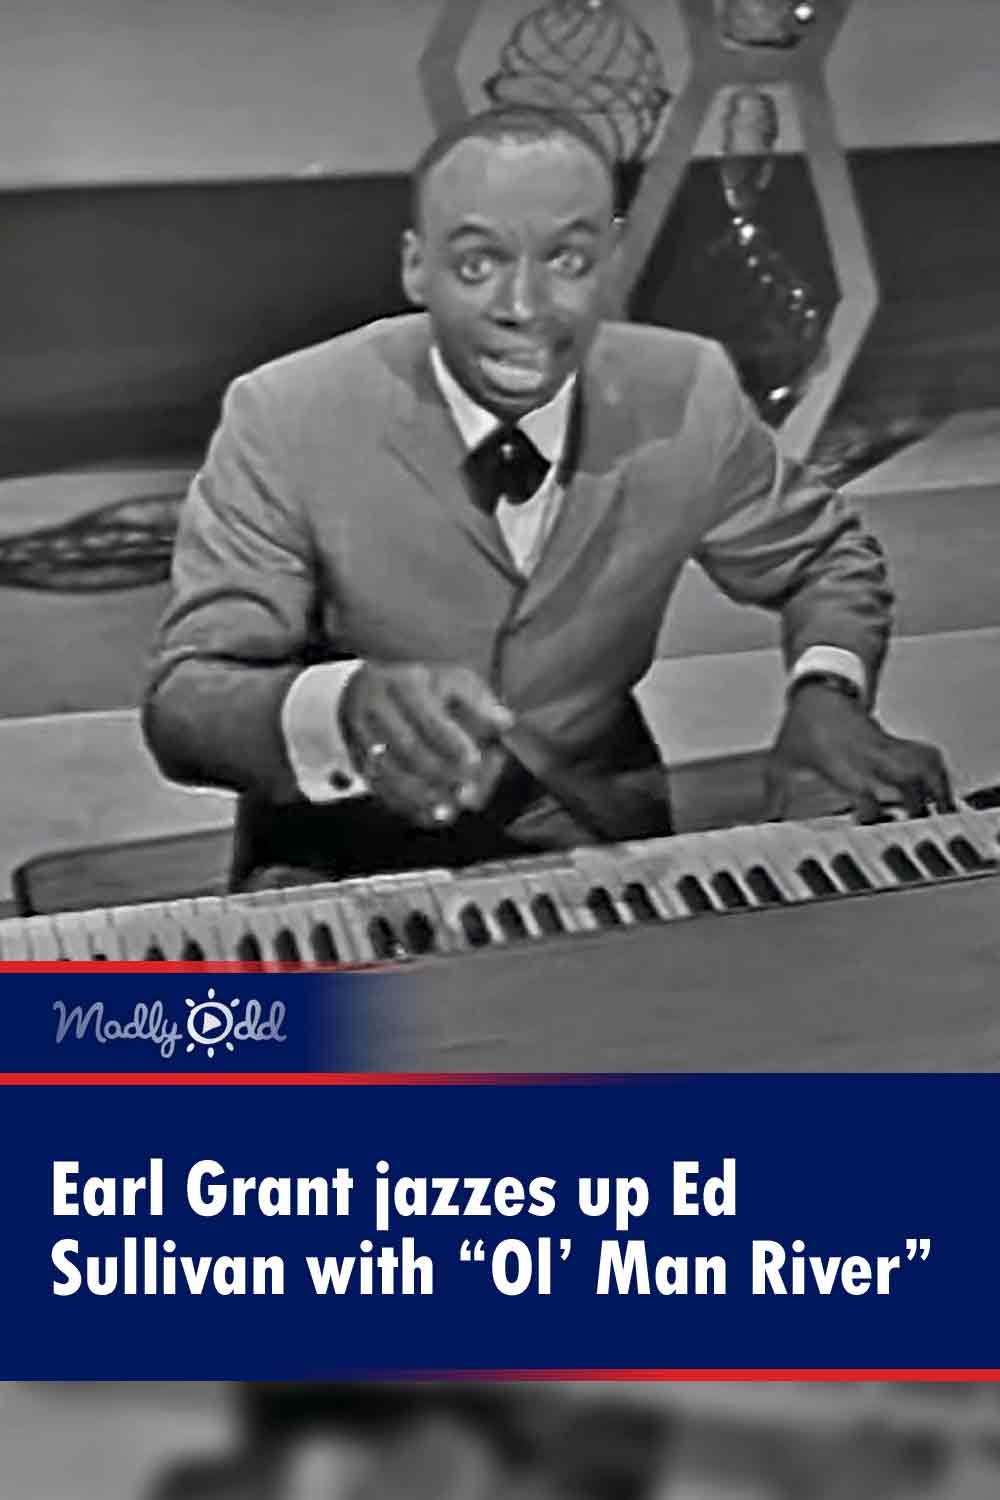 Earl Grant jazzes up Ed Sullivan with “Ol’ Man River”